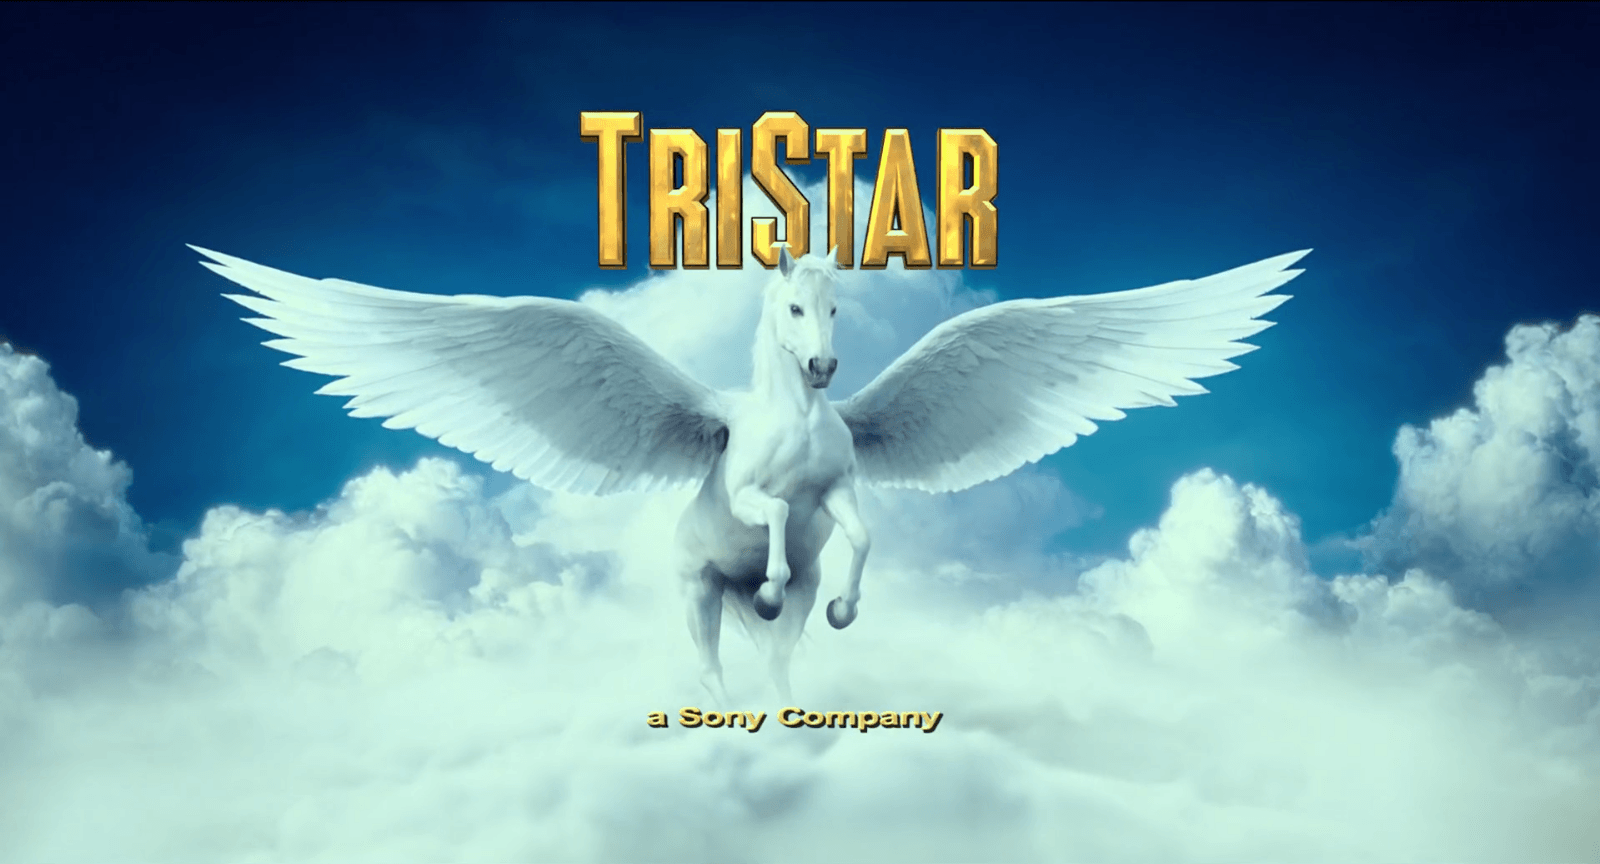 Pegasus Movie Logo - TriStar Pictures | Sony Pictures Entertaiment Wiki | FANDOM powered ...